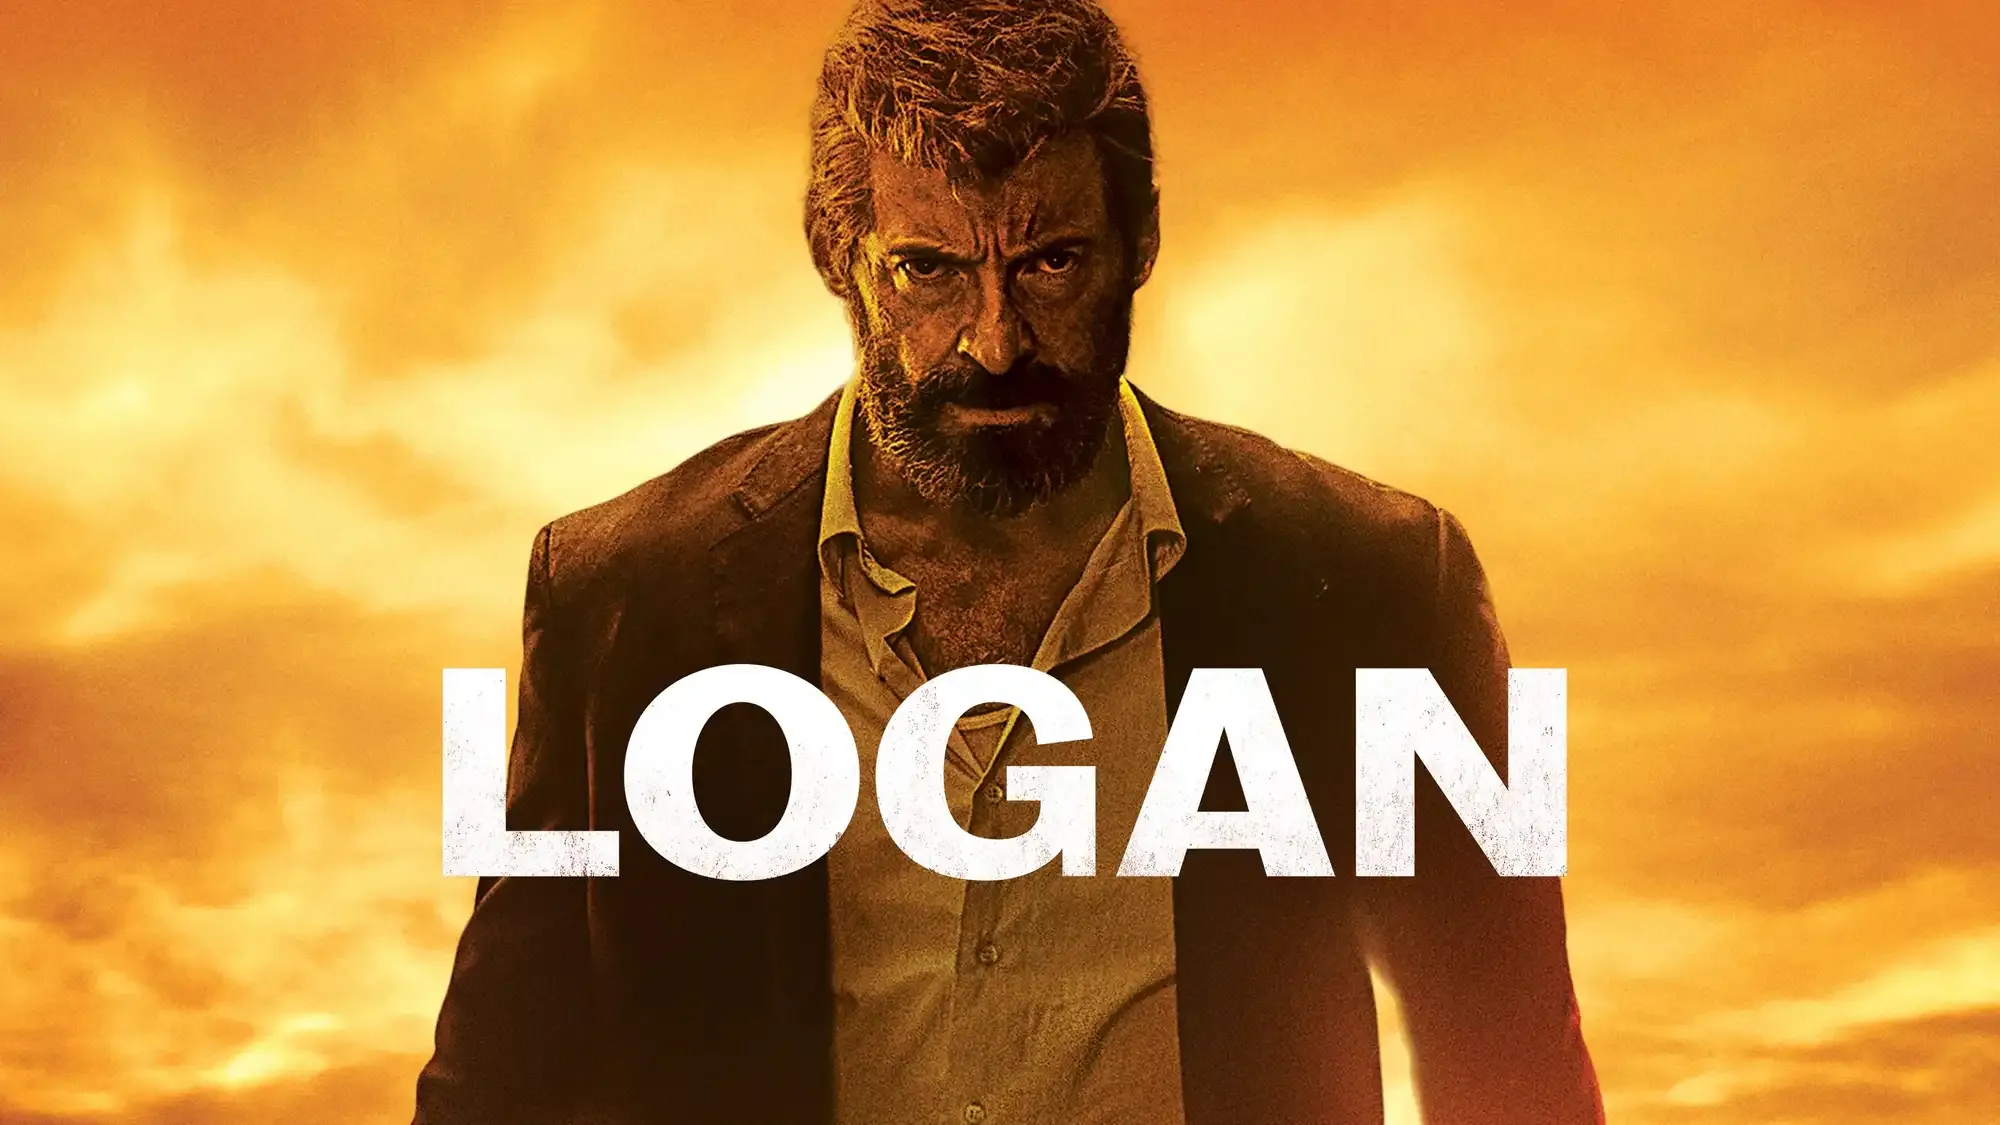 Logan movie review